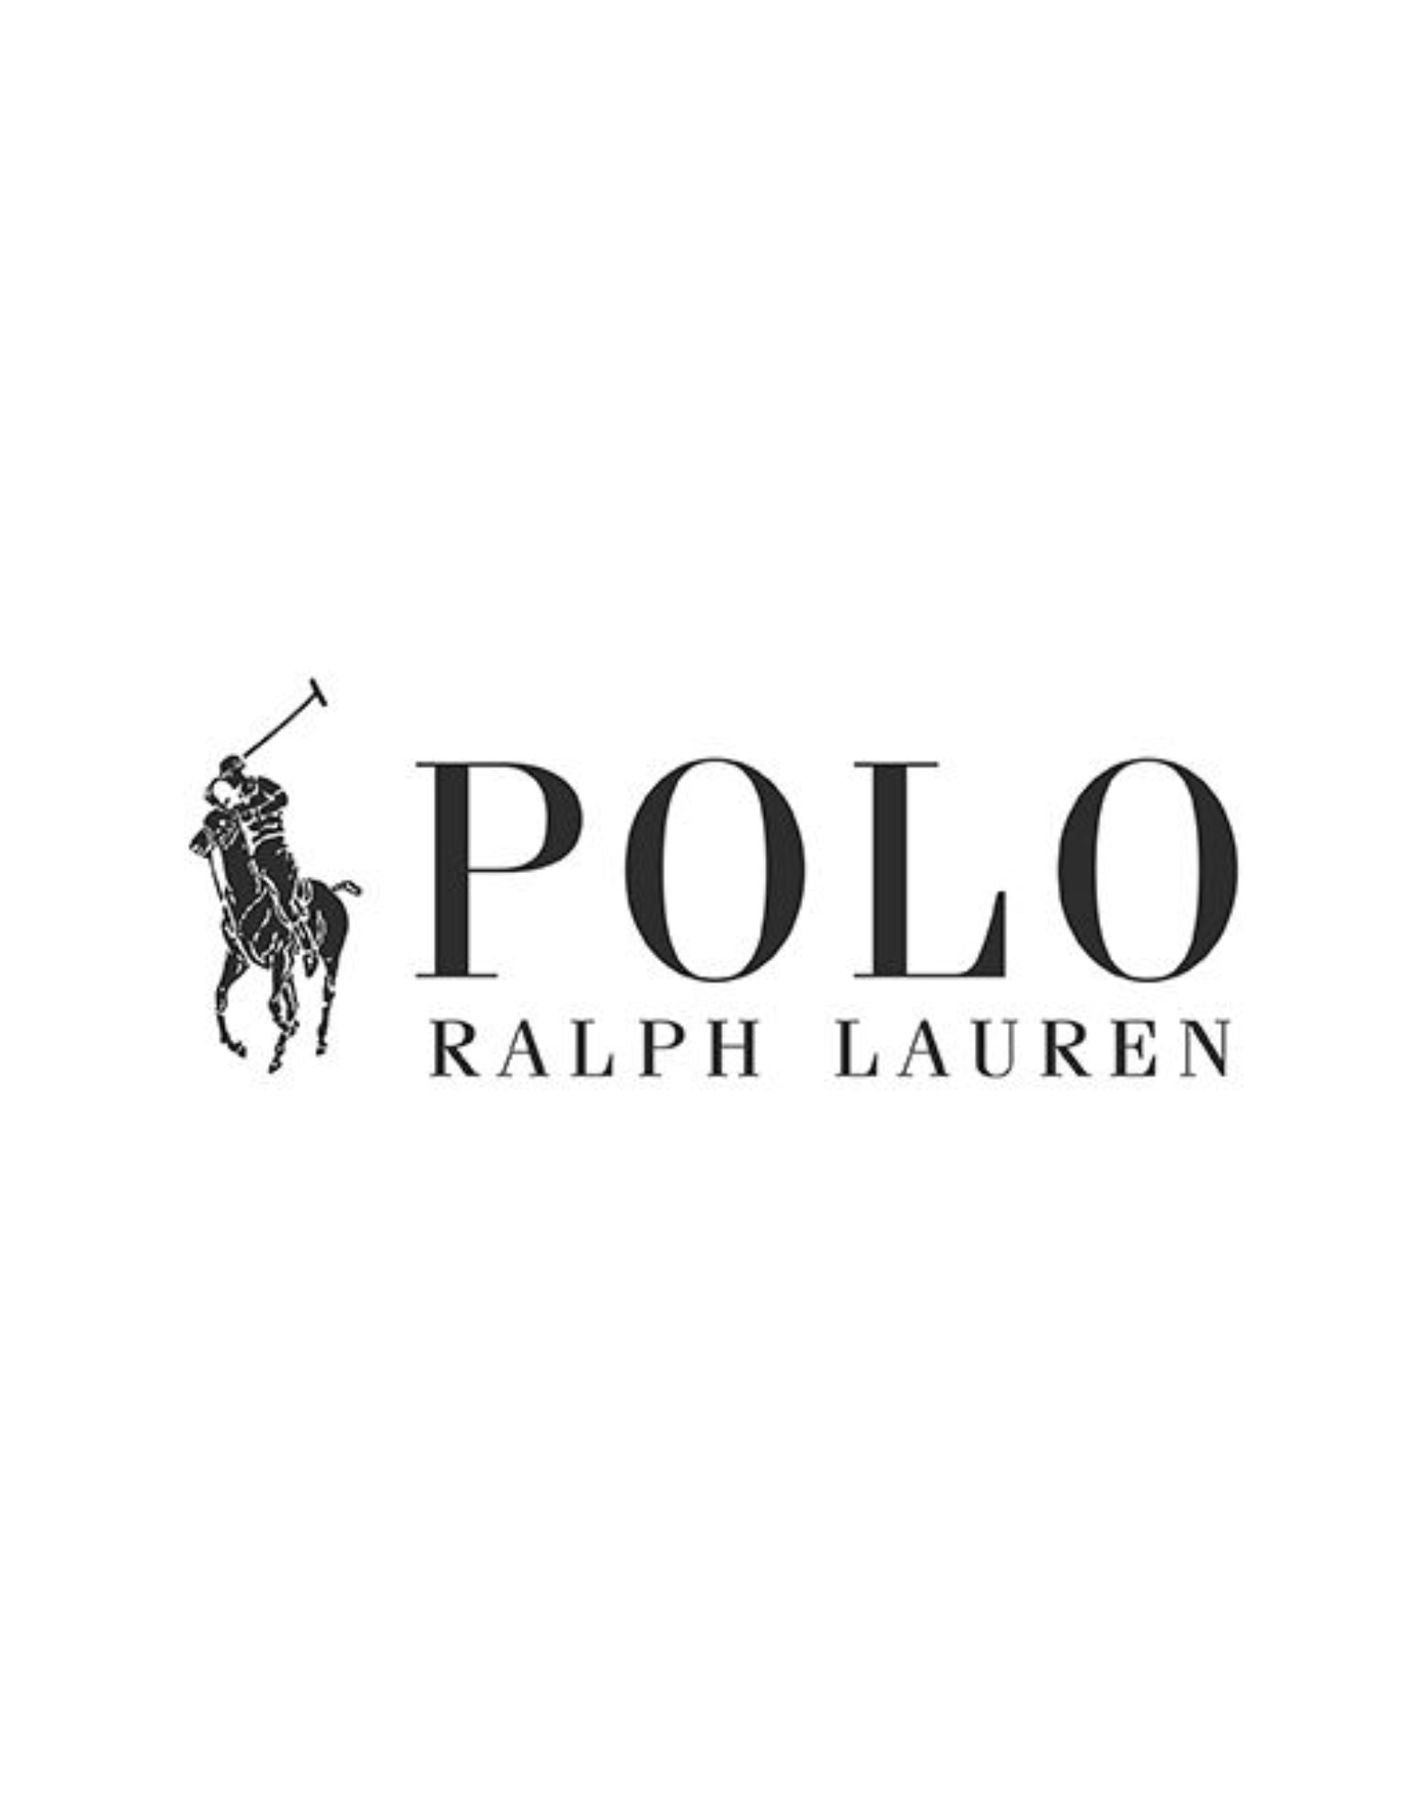 Camiseta para el hombre 714844756003 gris Polo Ralph Lauren